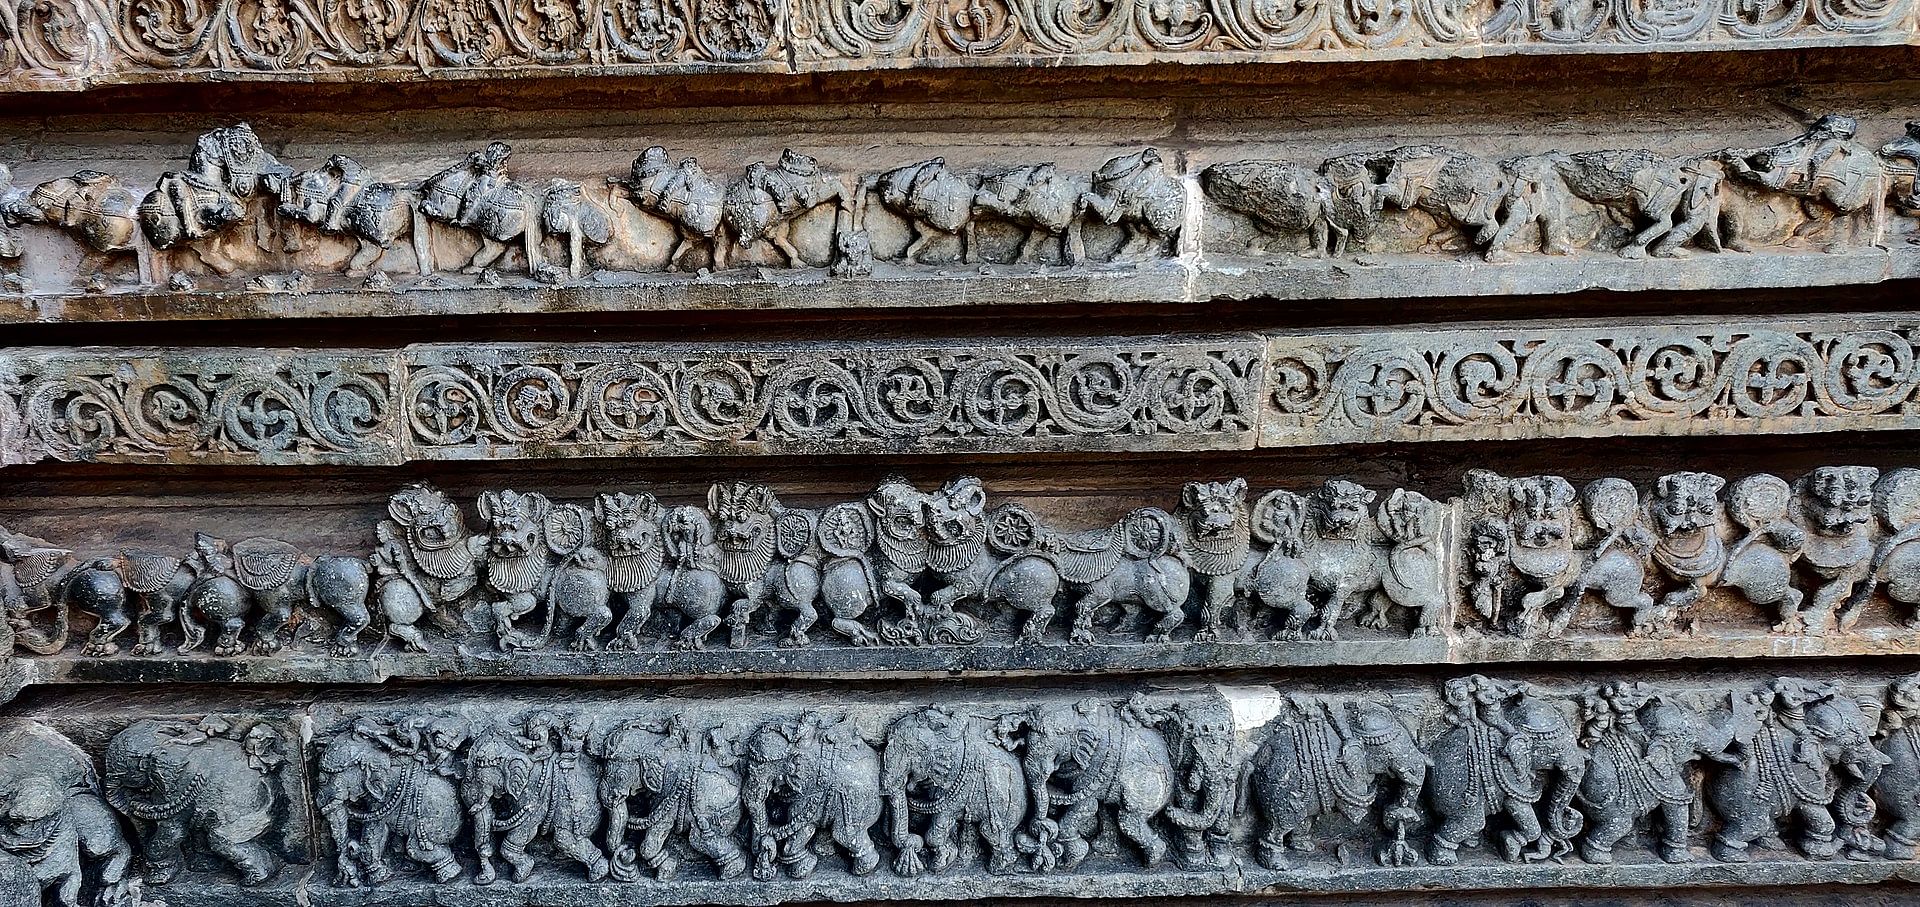 Wall carvings at the Hoysaleshwara Temple in Halebidu | Photo: Maneesha Muralidharan | Wikimedia Commons